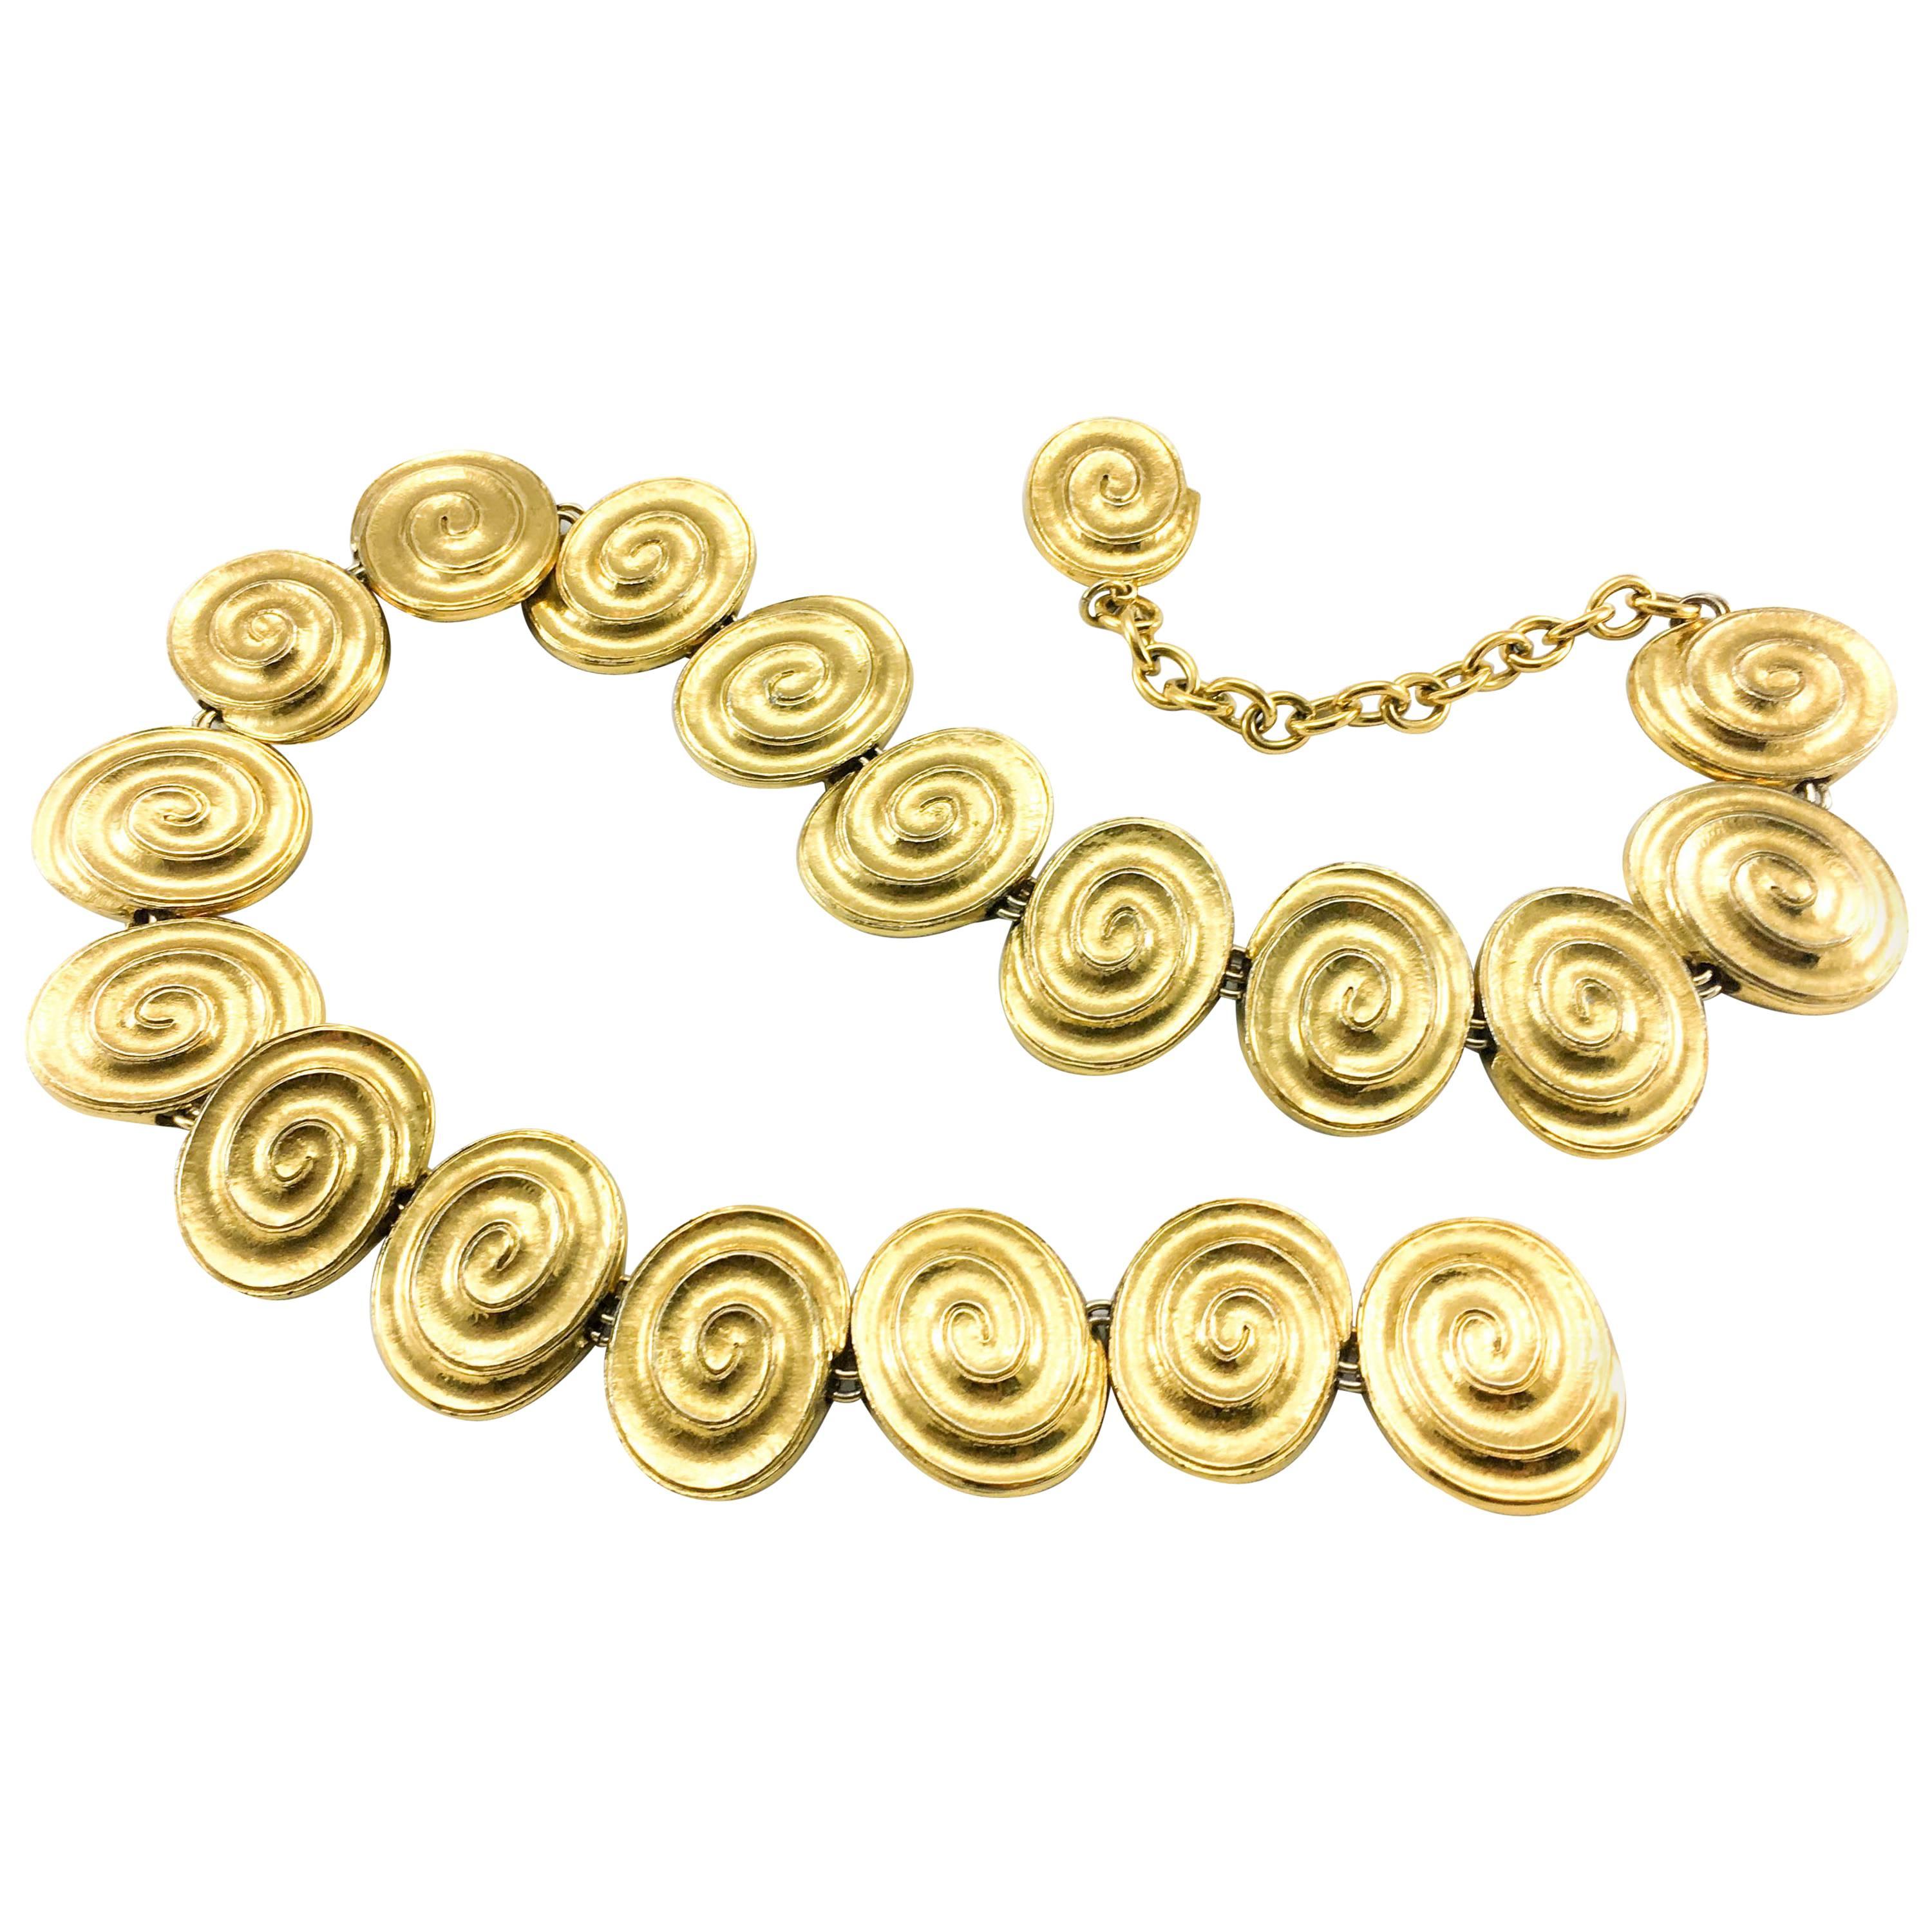 Yves Saint Laurent Gold-Plated 'Spiral' Belt / Necklace - 1980's